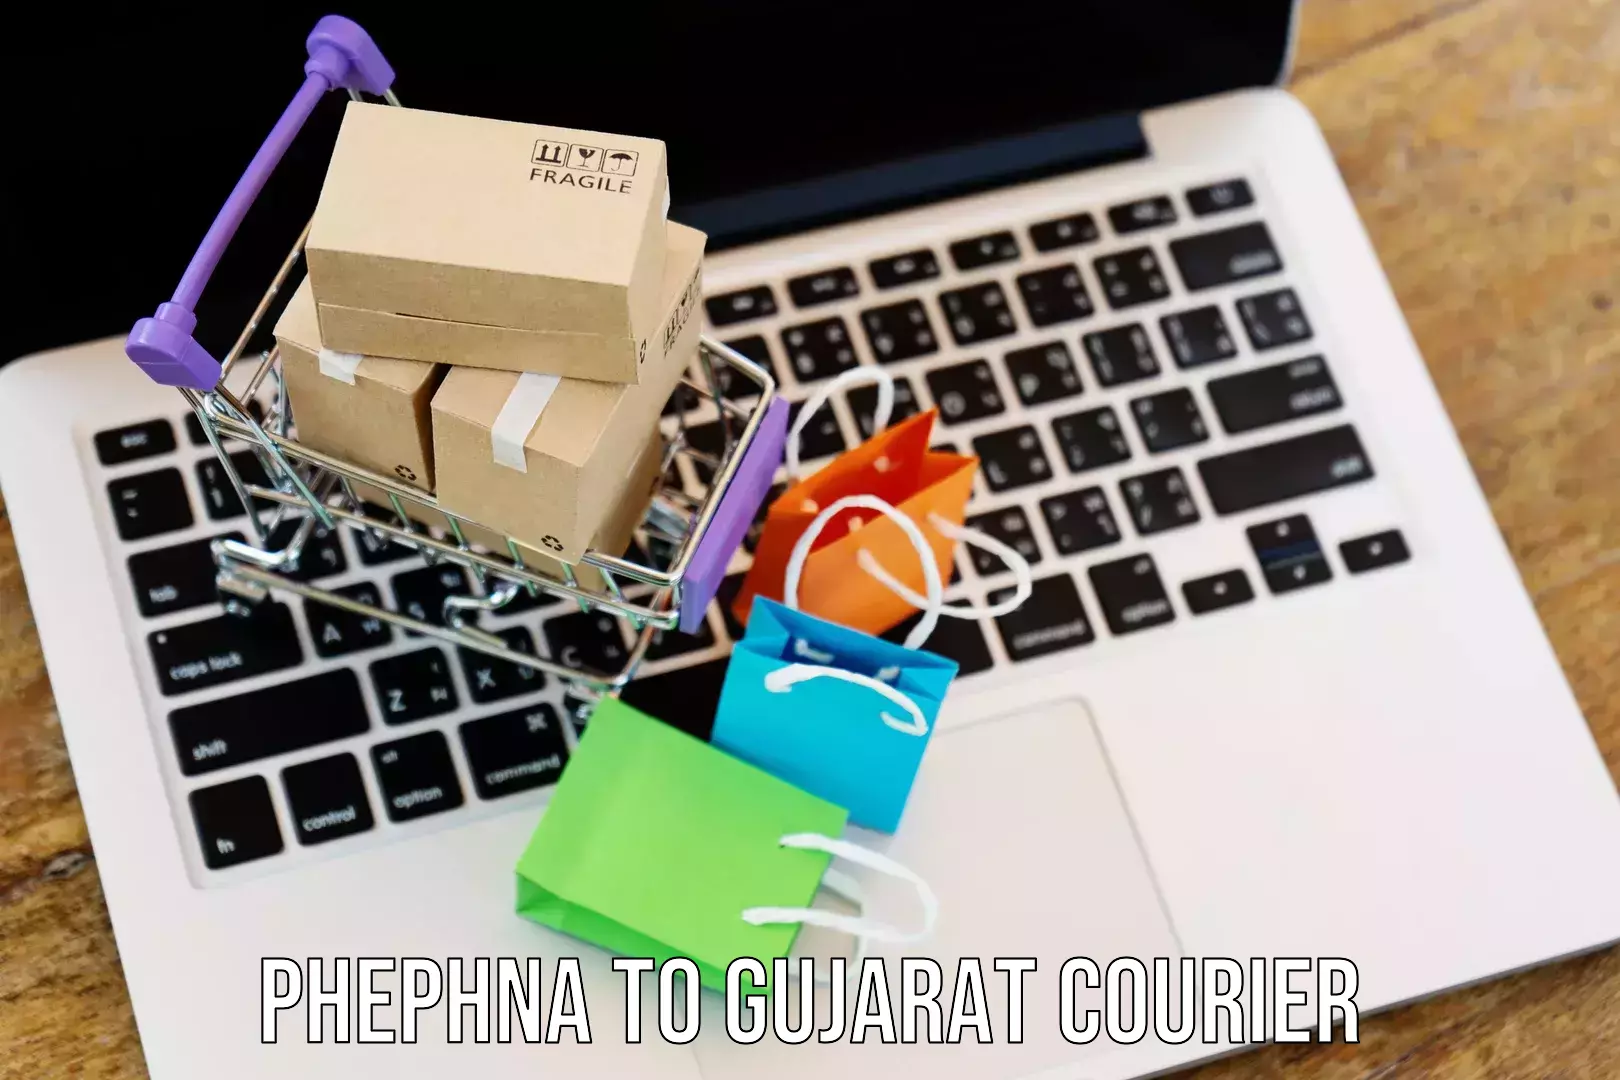 Advanced shipping technology Phephna to Gujarat